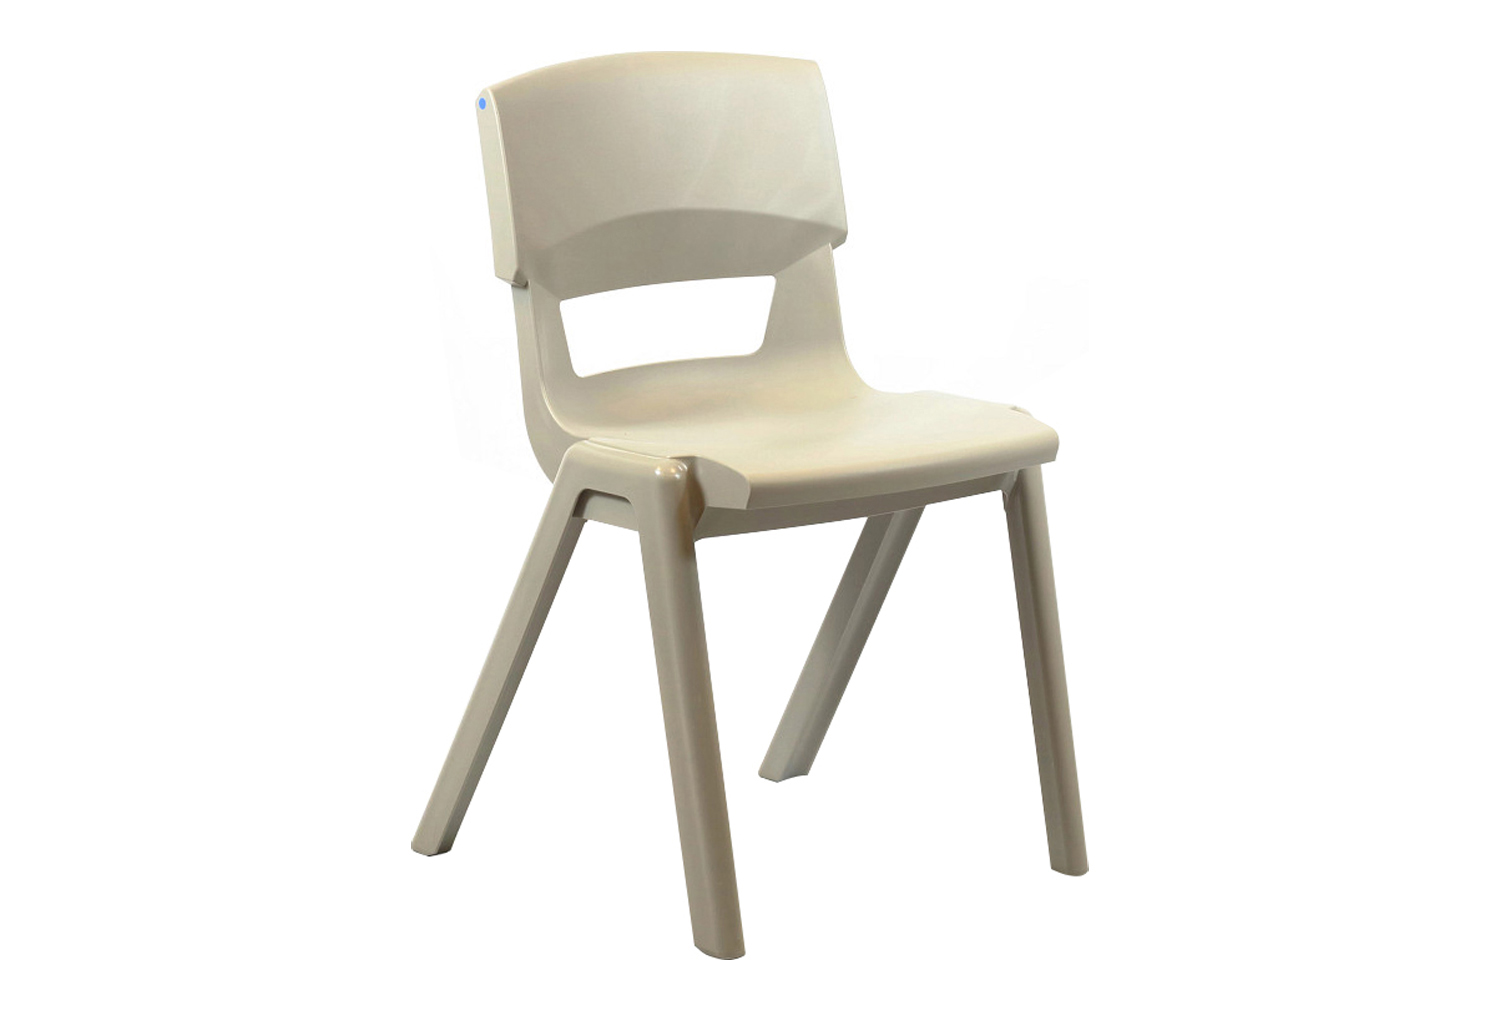 Qty 10 - Postura+ Classroom Chair, 14+ Years - 38wx37dx46h (cm), Light Sand